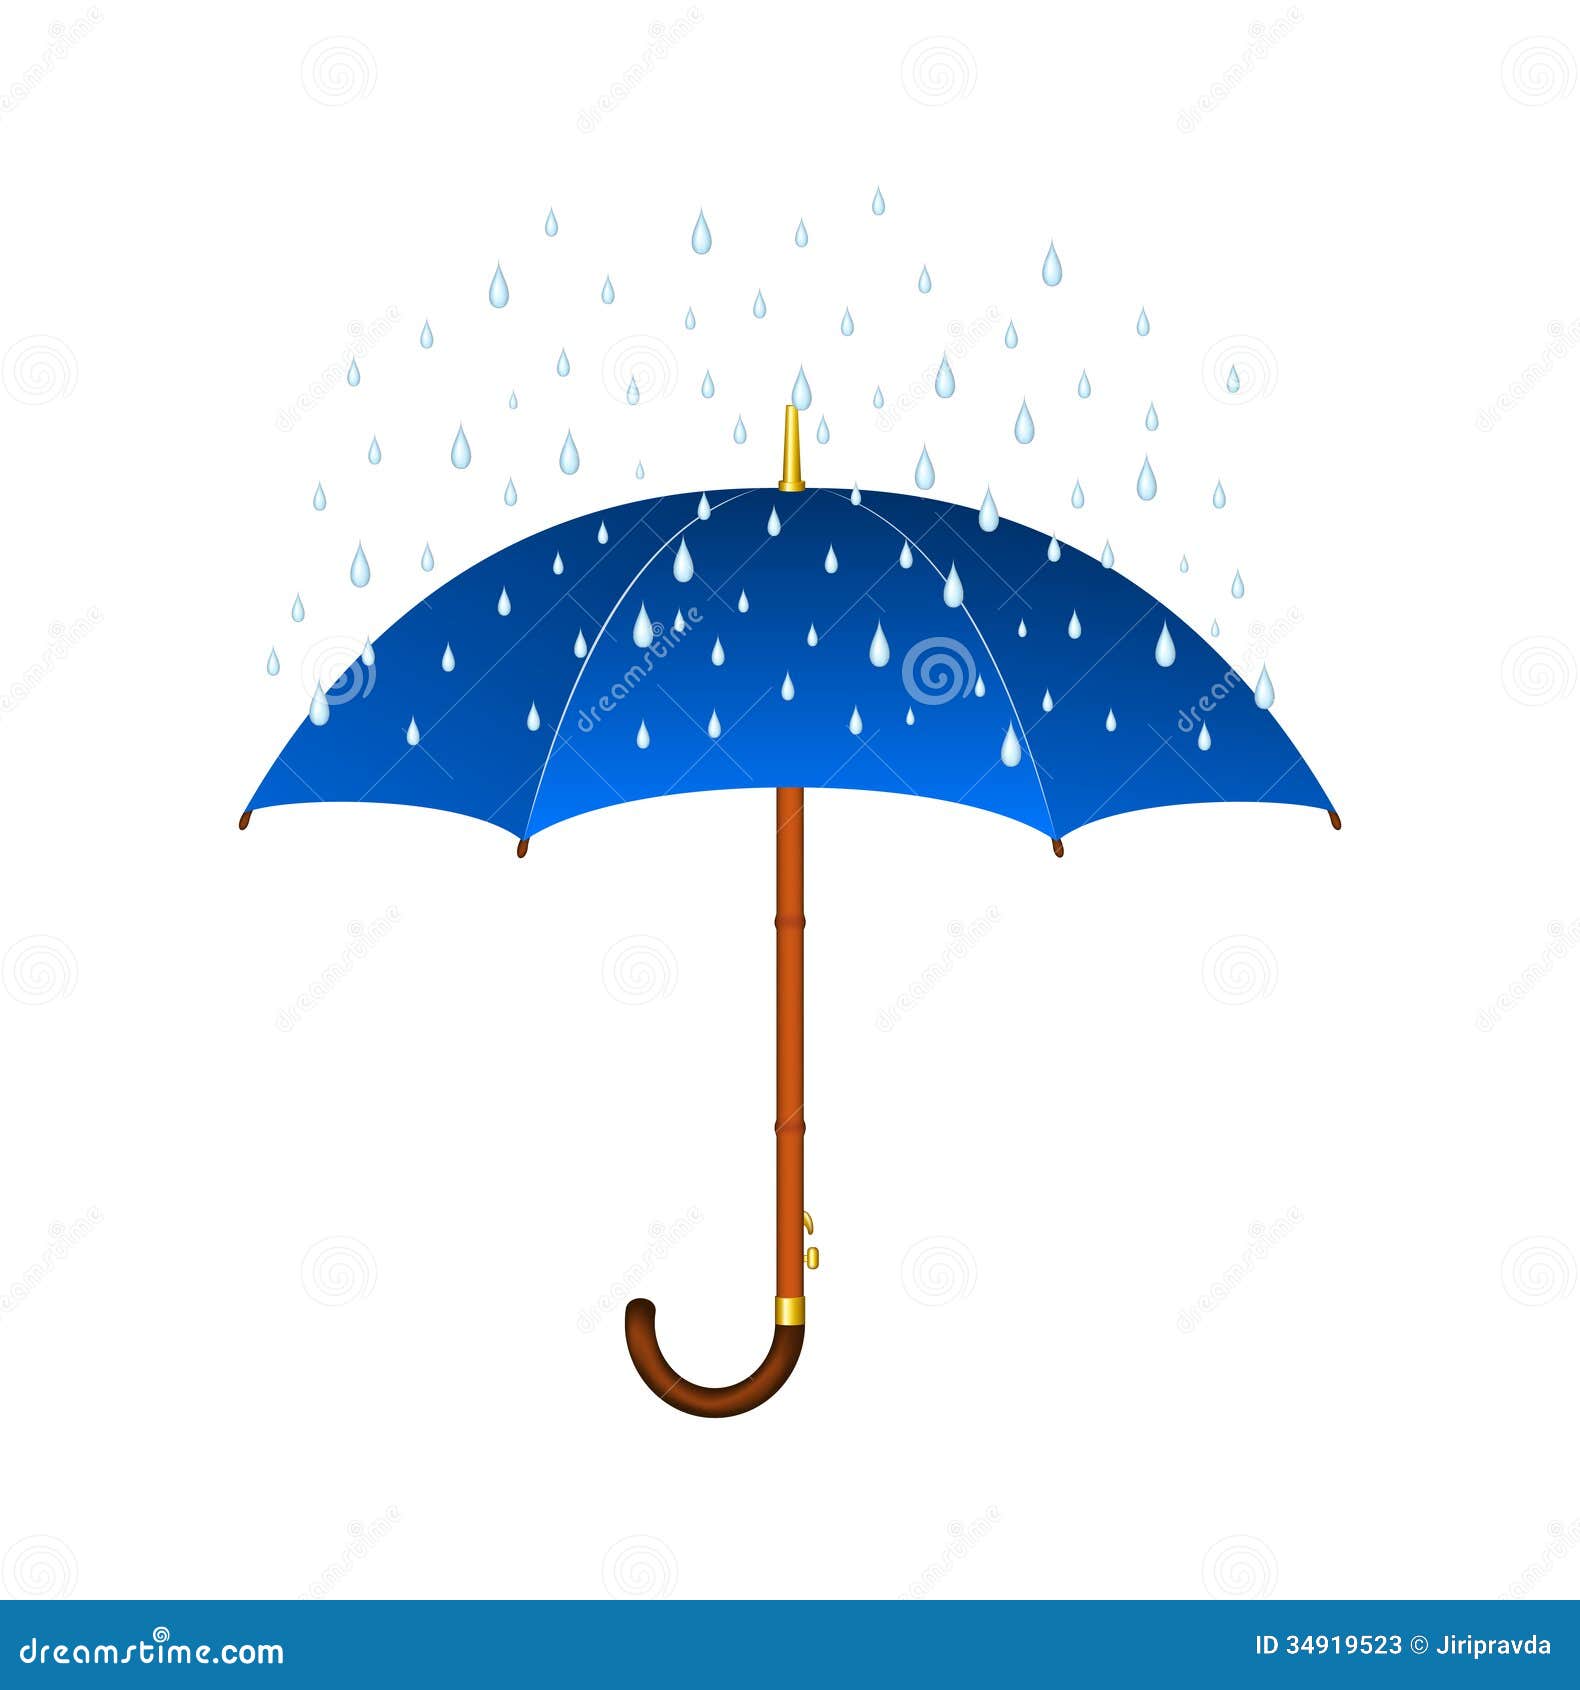 clipart of umbrellas and rain - photo #26